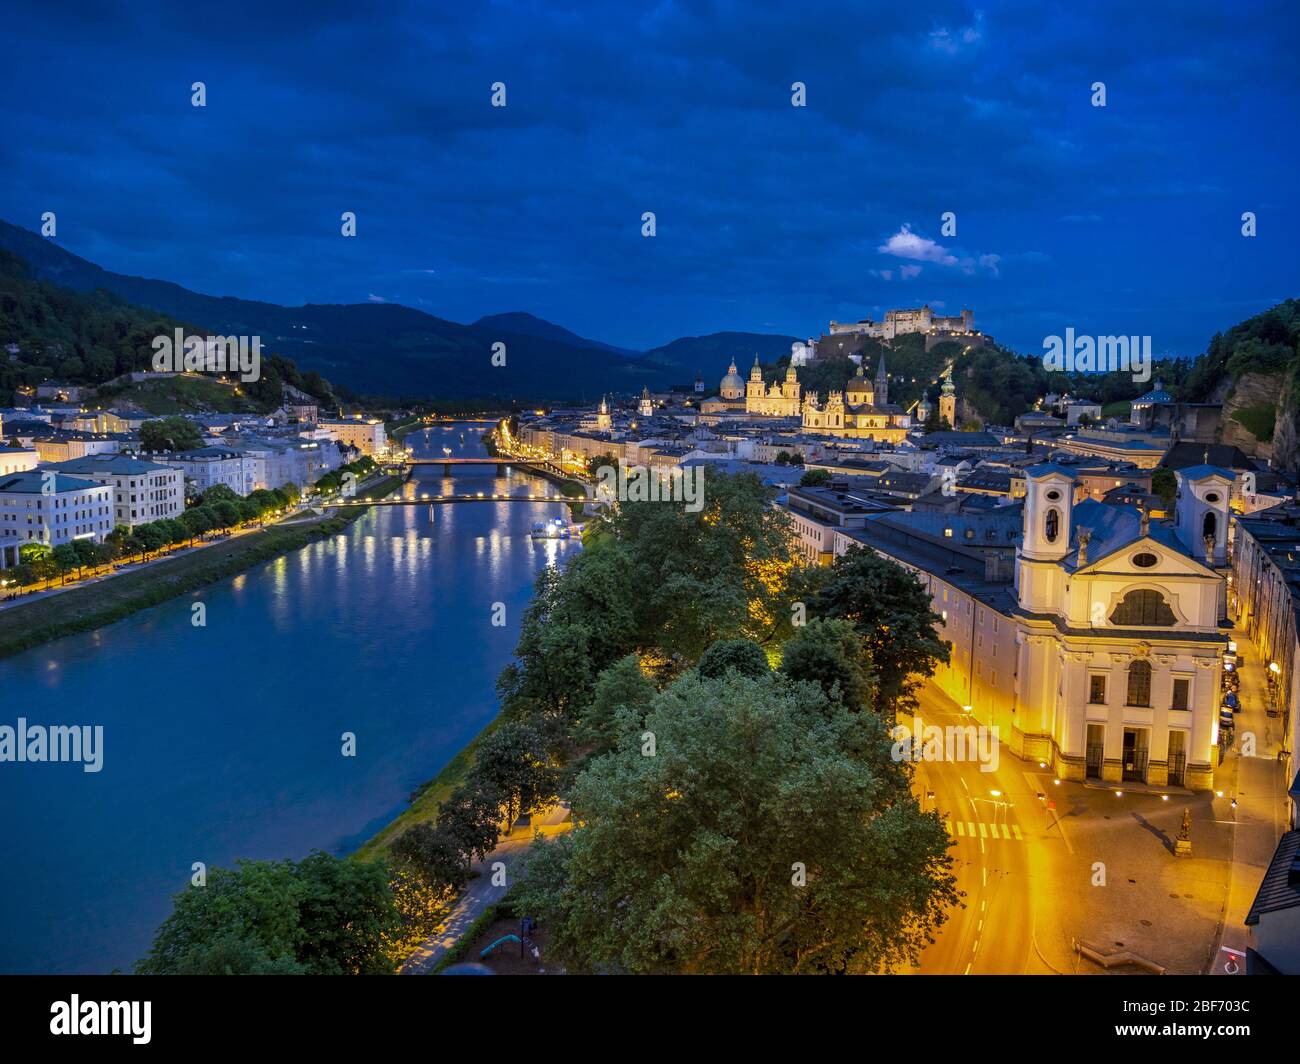 Historic town centre of Salzburg and castle at night, Austria, Salzburg Stock Photo